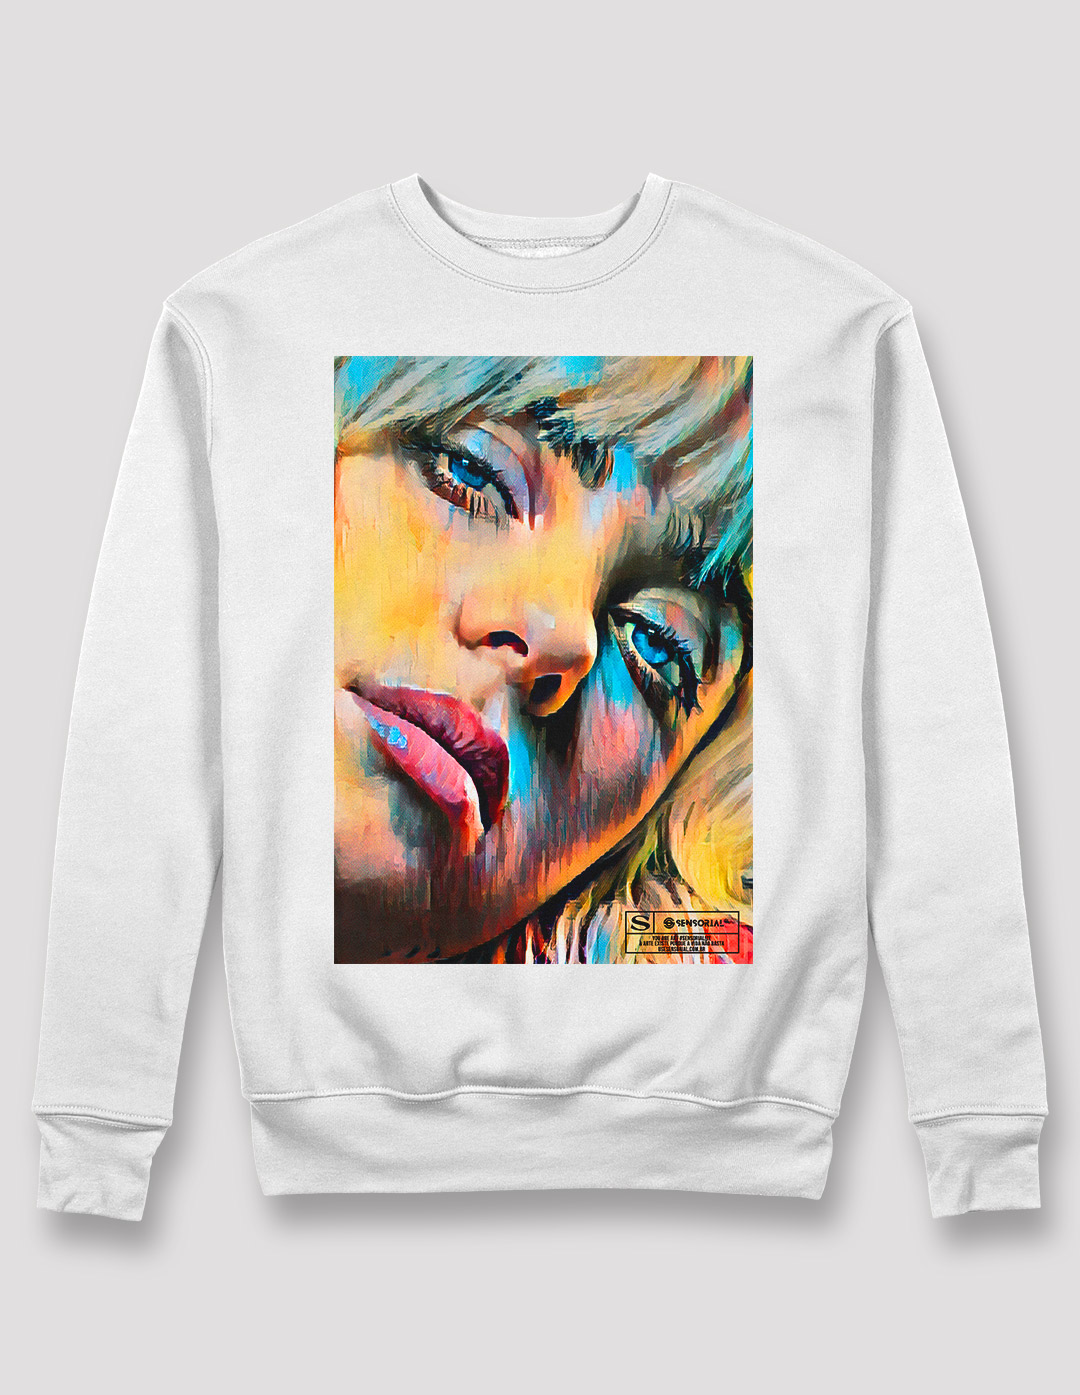 Moletom Billie Eilish - Sensorial, camisetas exclusivas, compre online